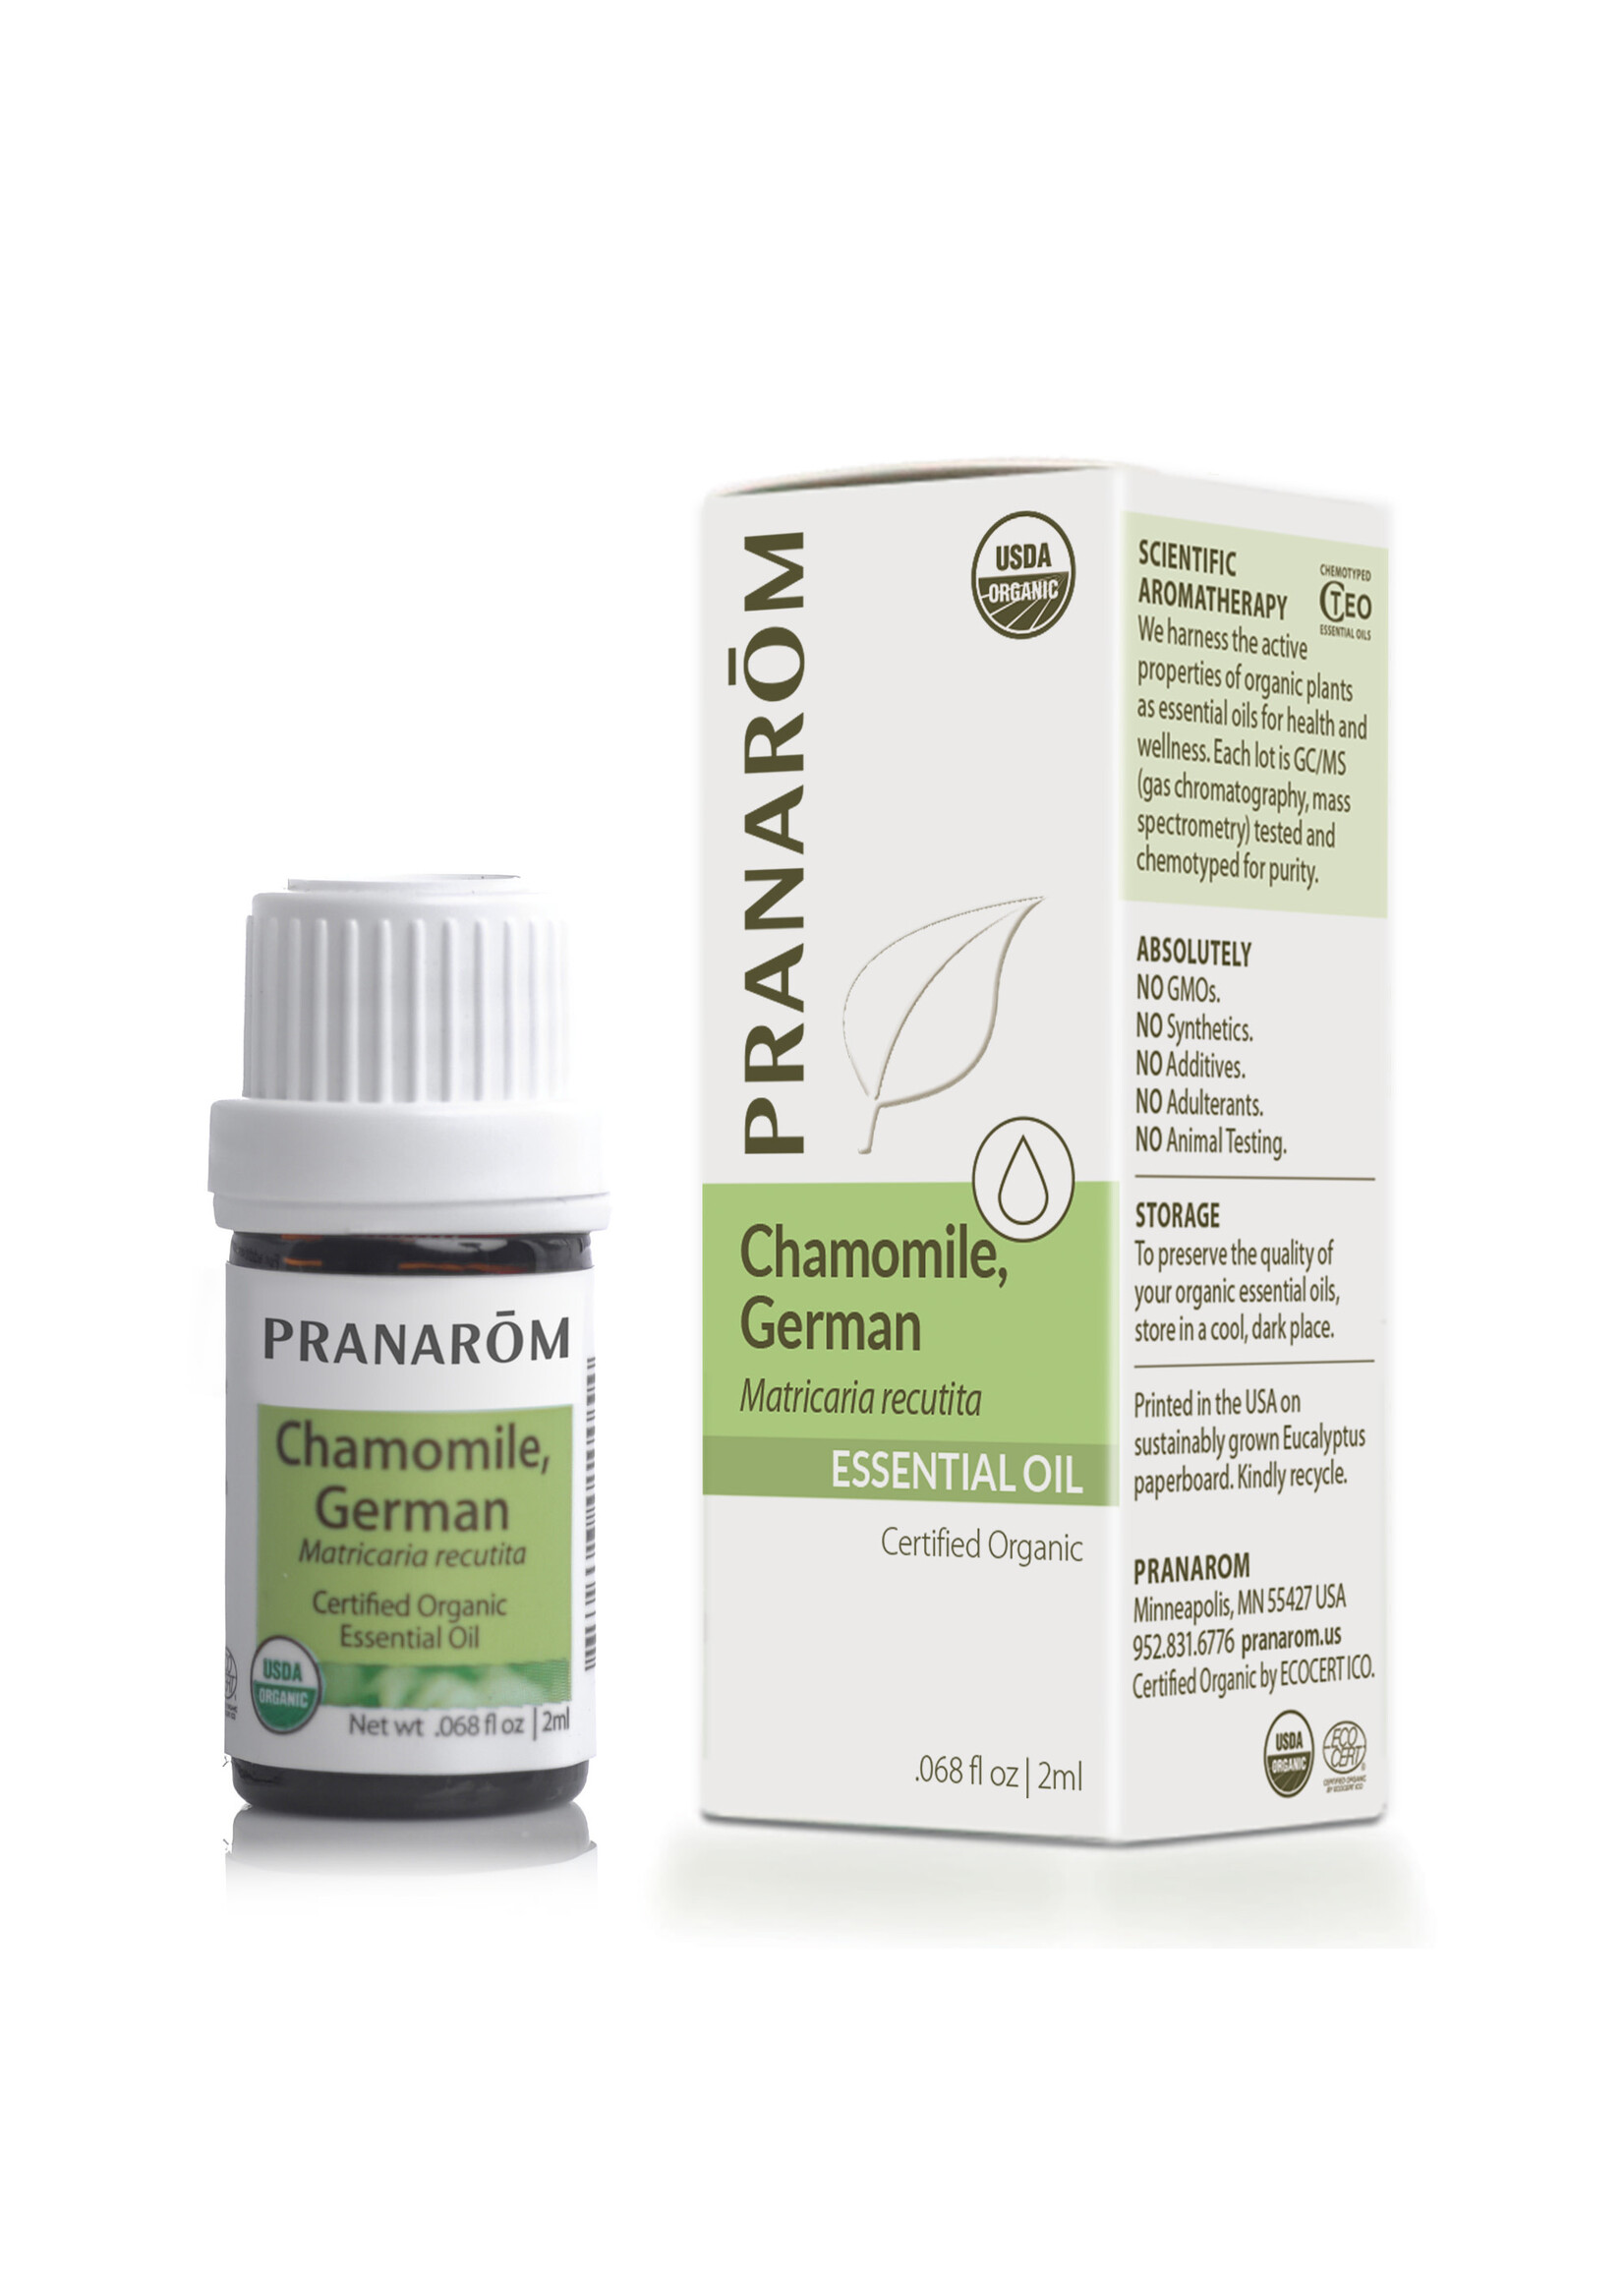 Pranoram Chamomile, German 2ml (Matricaria recutita)